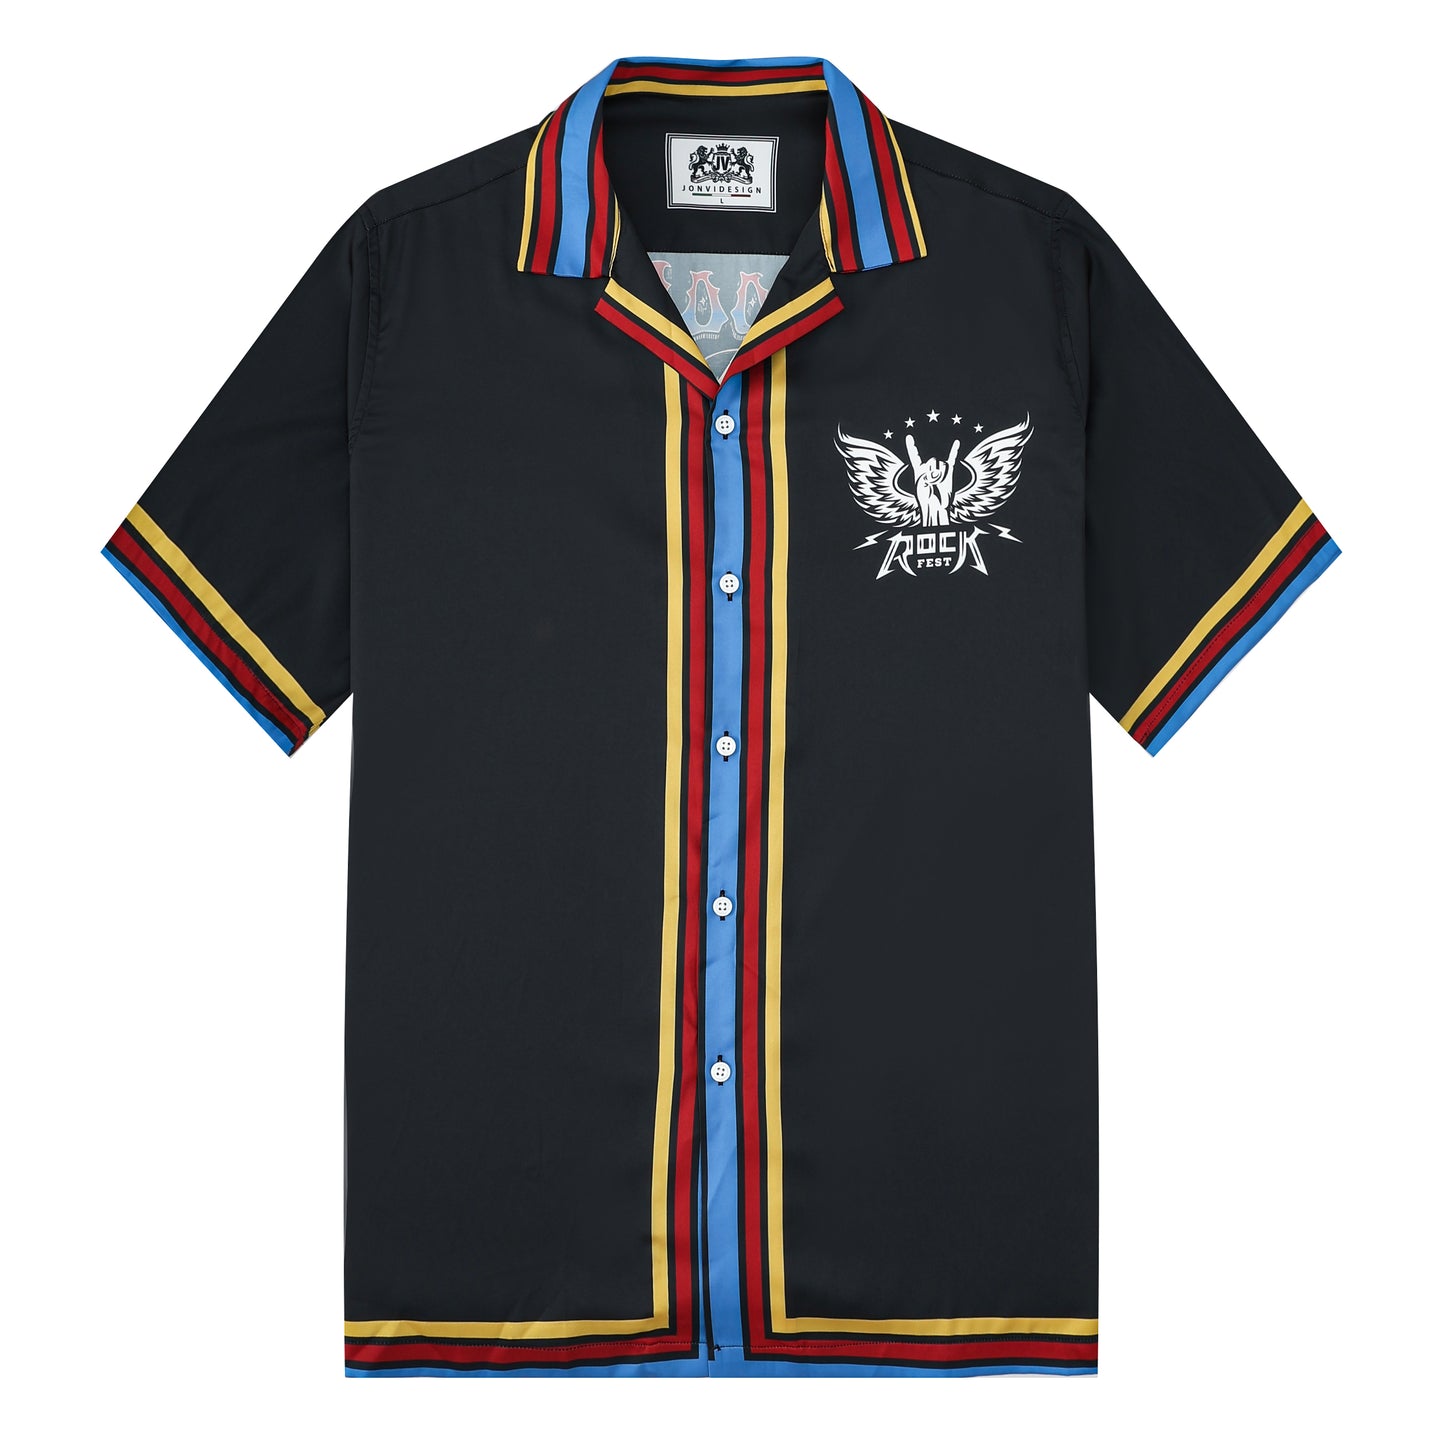 Voodoo Rock World Tour Pattern Camp Collar Casual Shirt for Men